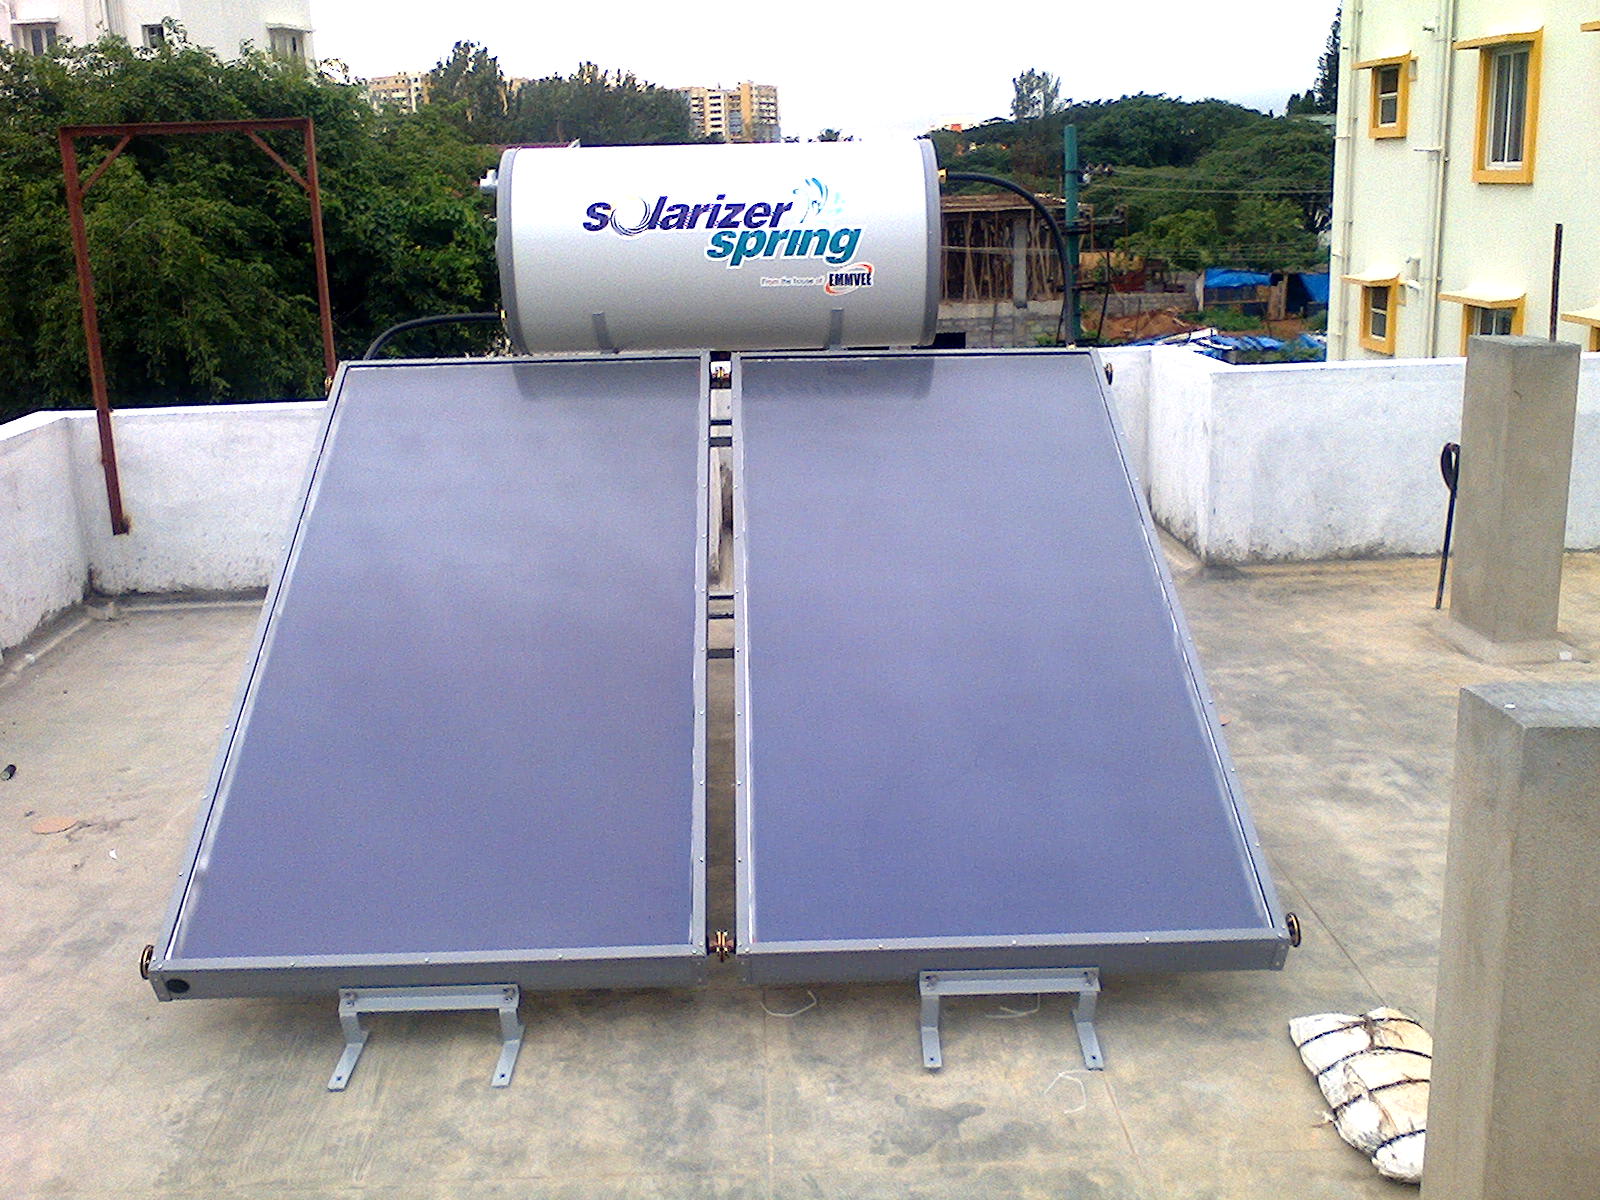 Solarizer solar water heaters by Smsolar | Fiverr